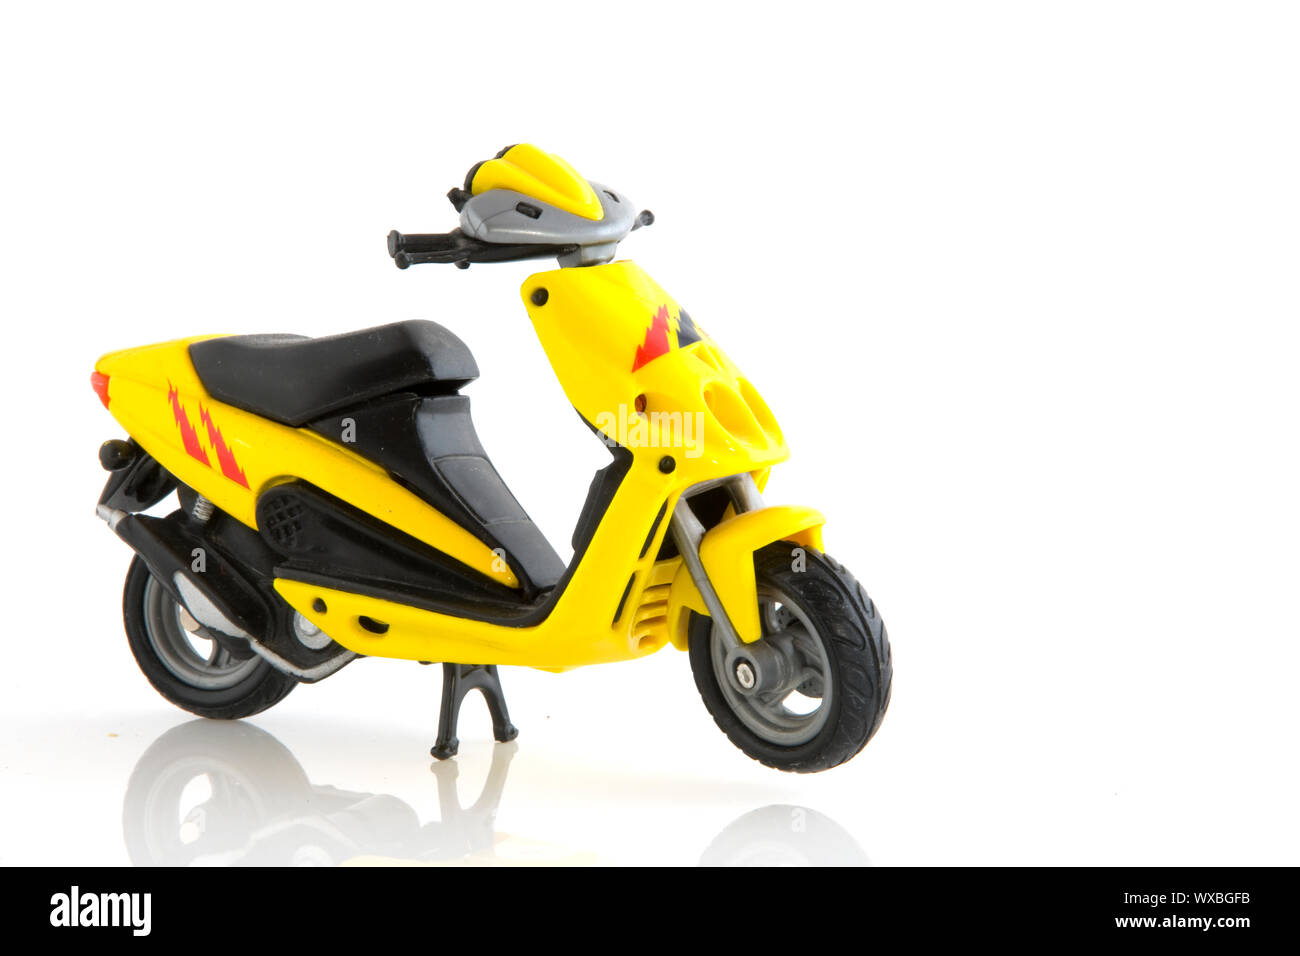 Yellow miniature scooter Stock Photo - Alamy